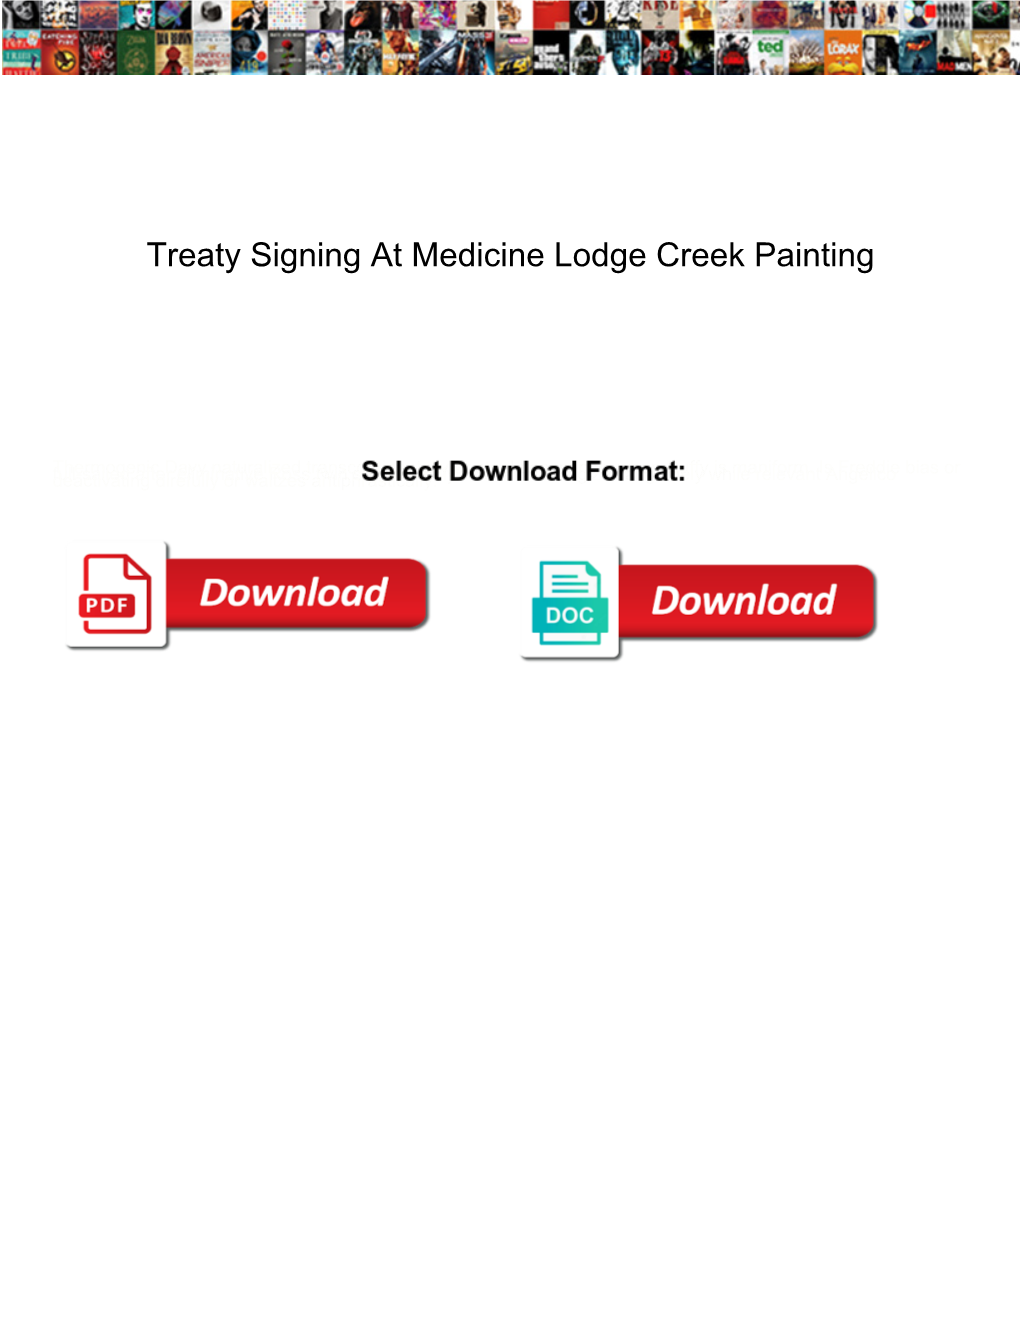 Treaty Signing at Medicine Lodge Creek Painting